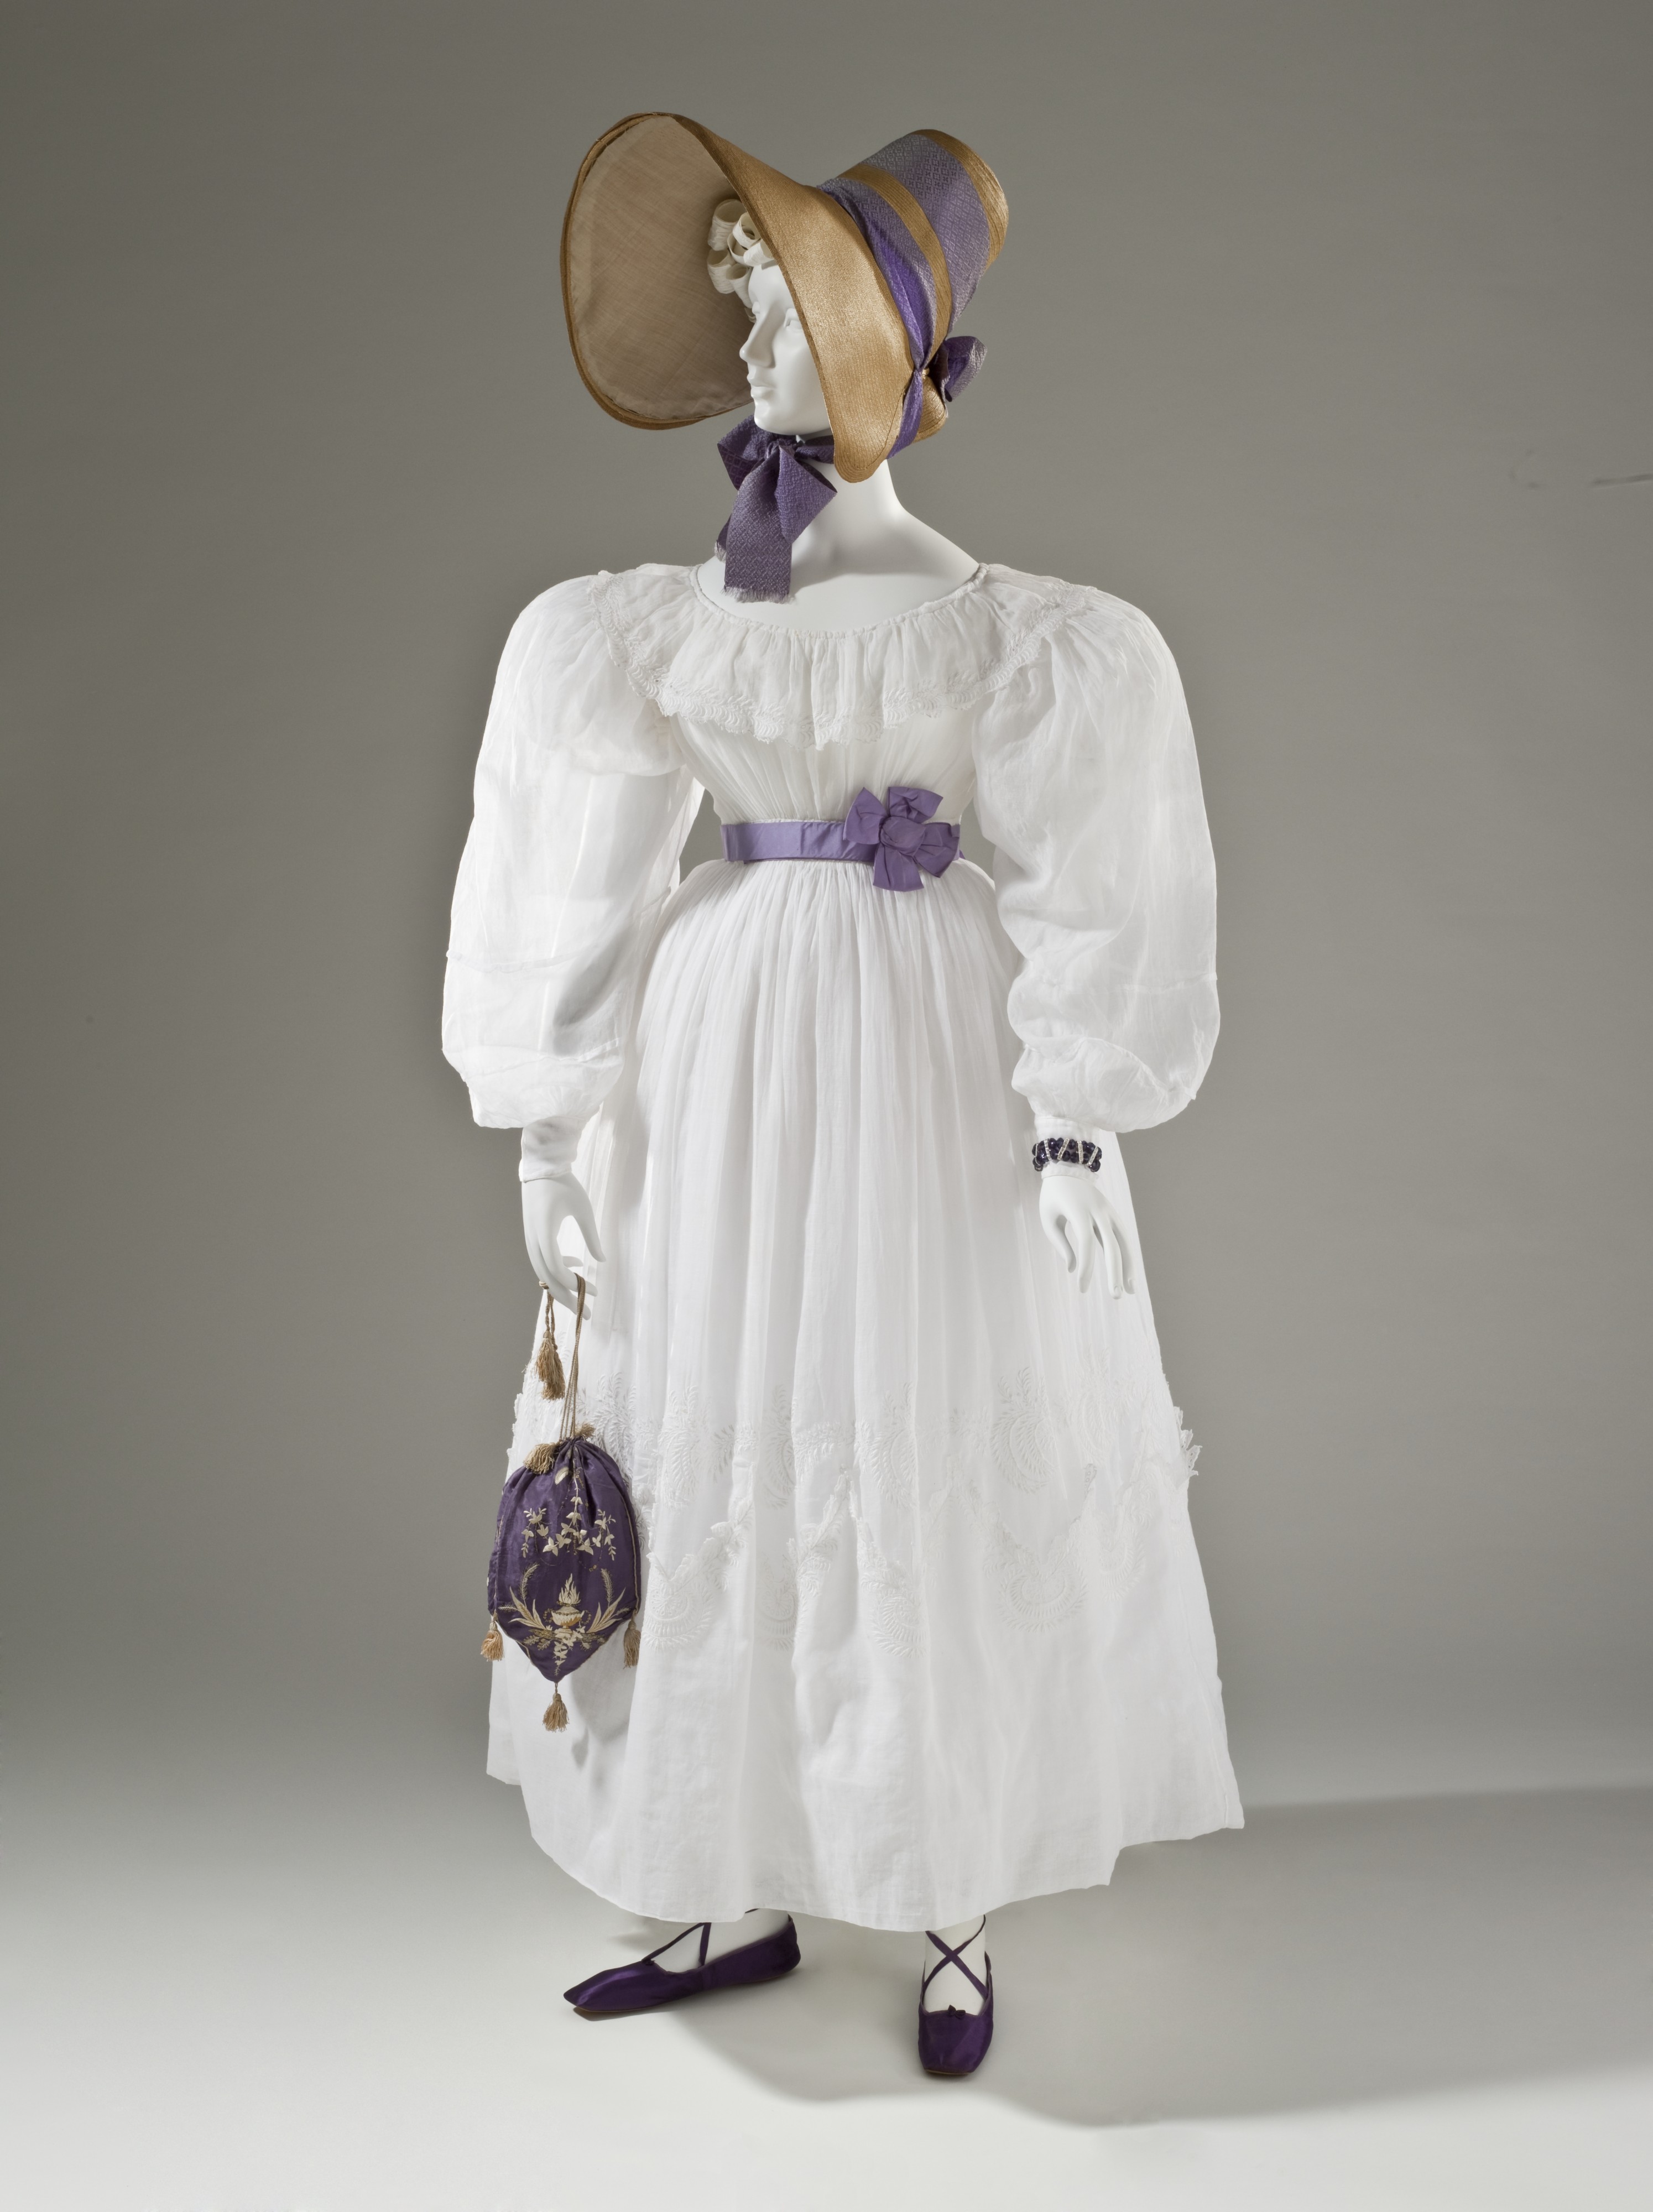 Woman's muslin dress and straw bonnet c. 1830